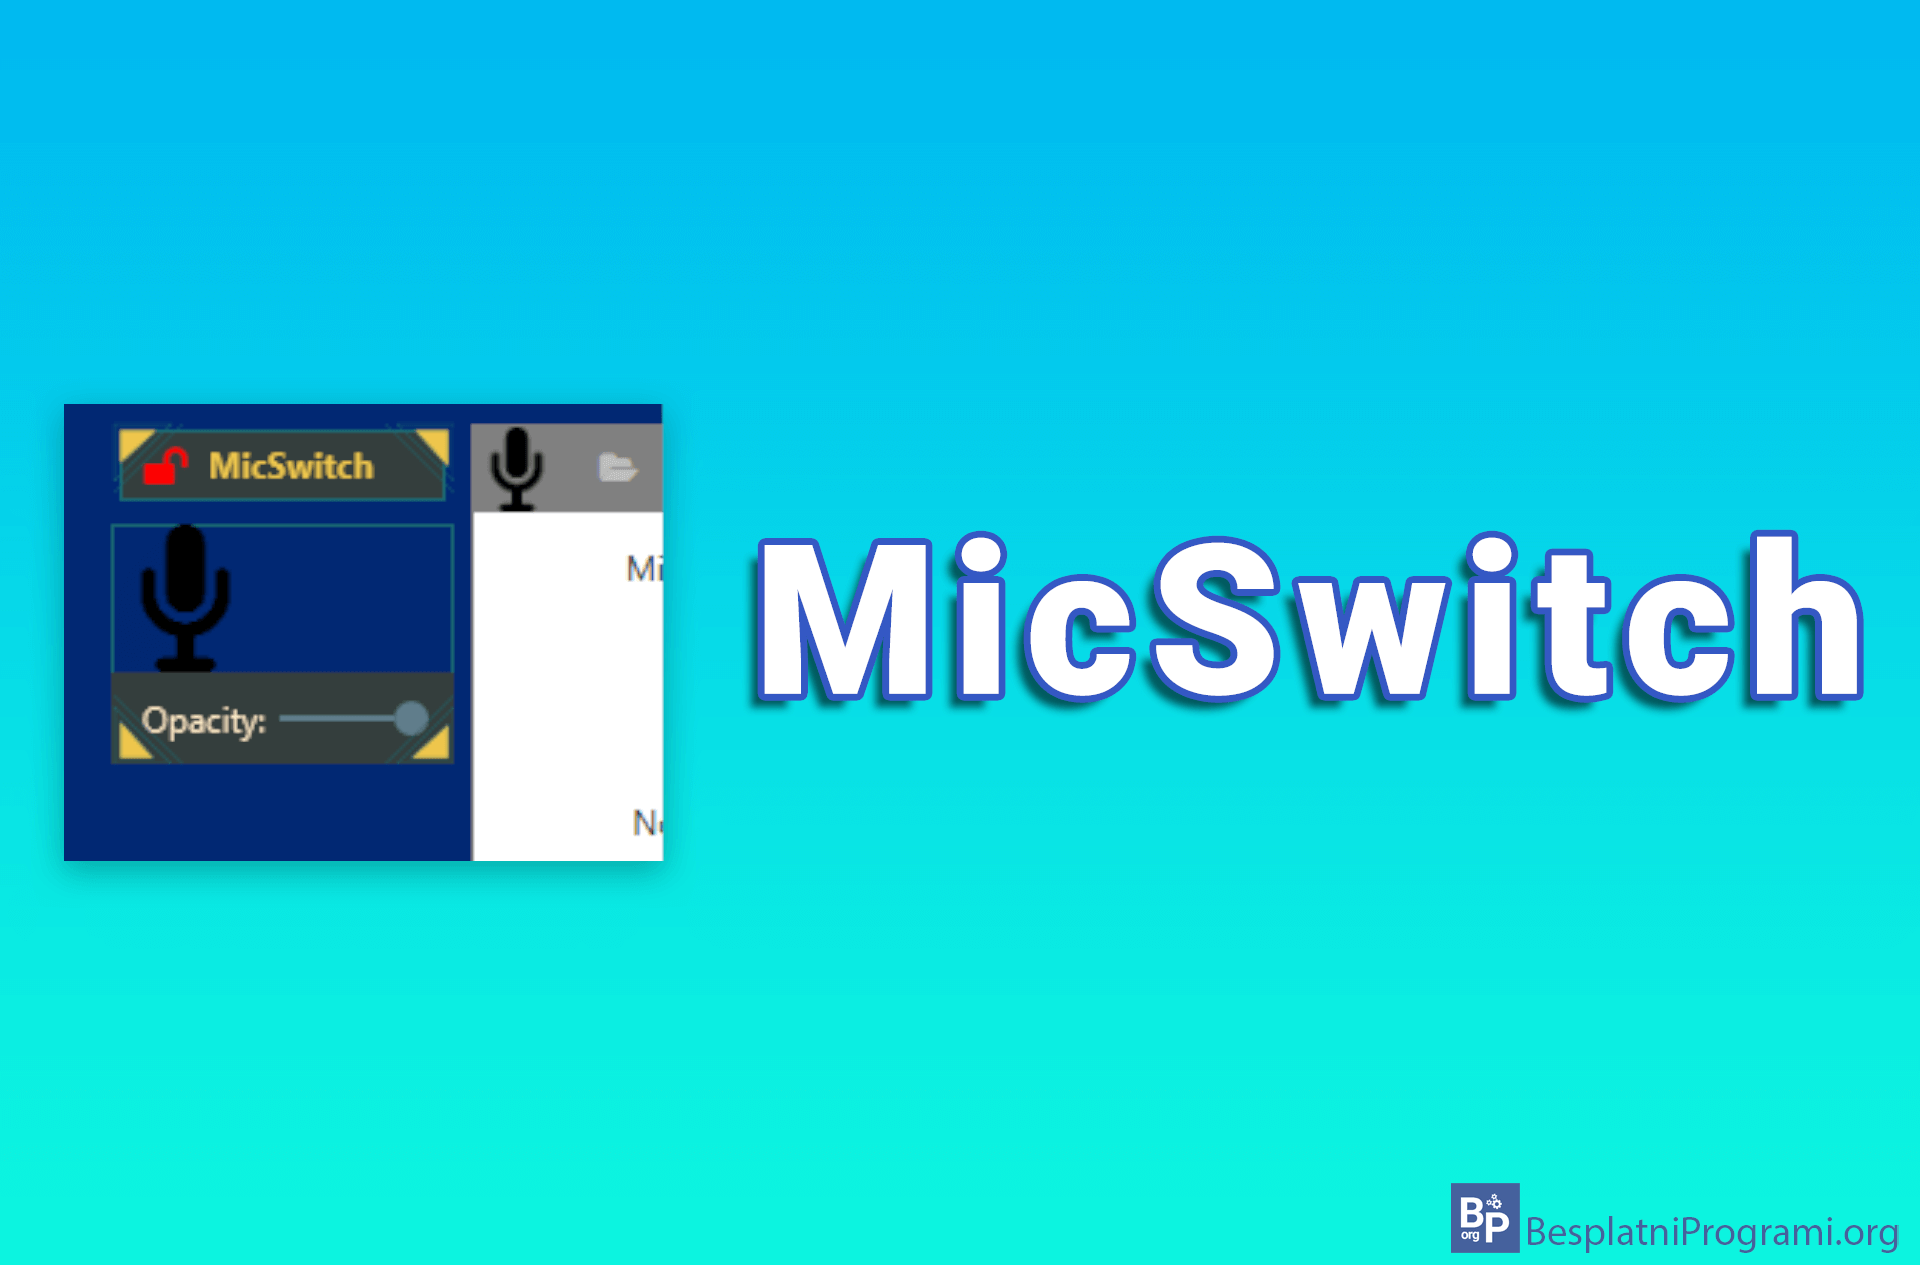 MicSwitch